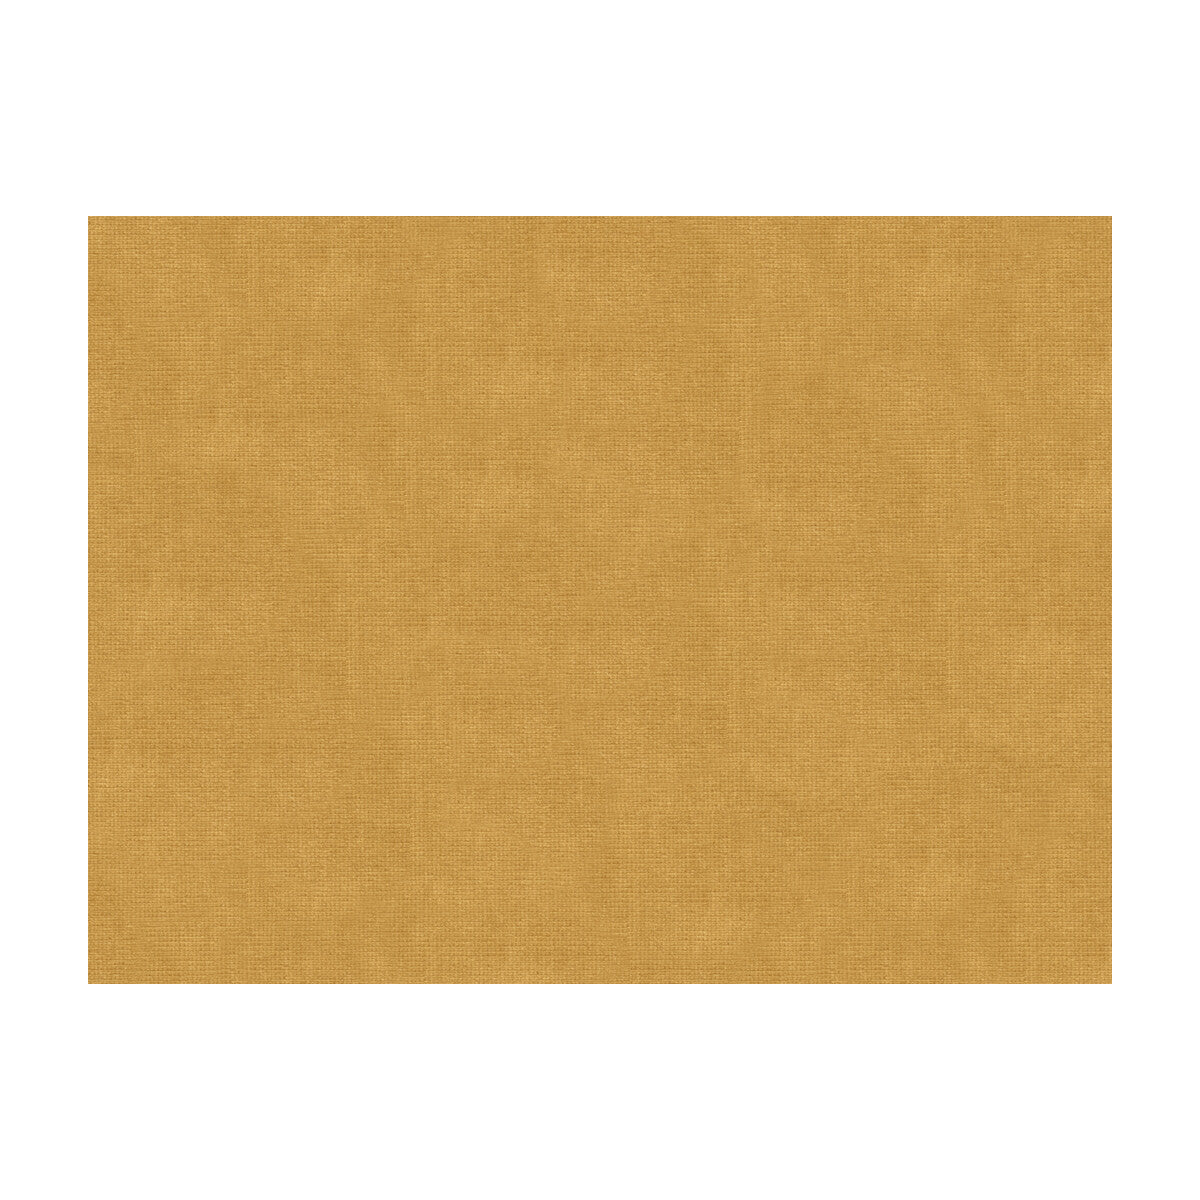 Charmant Velvet fabric in beige color - pattern 8013150.404.0 - by Brunschwig &amp; Fils